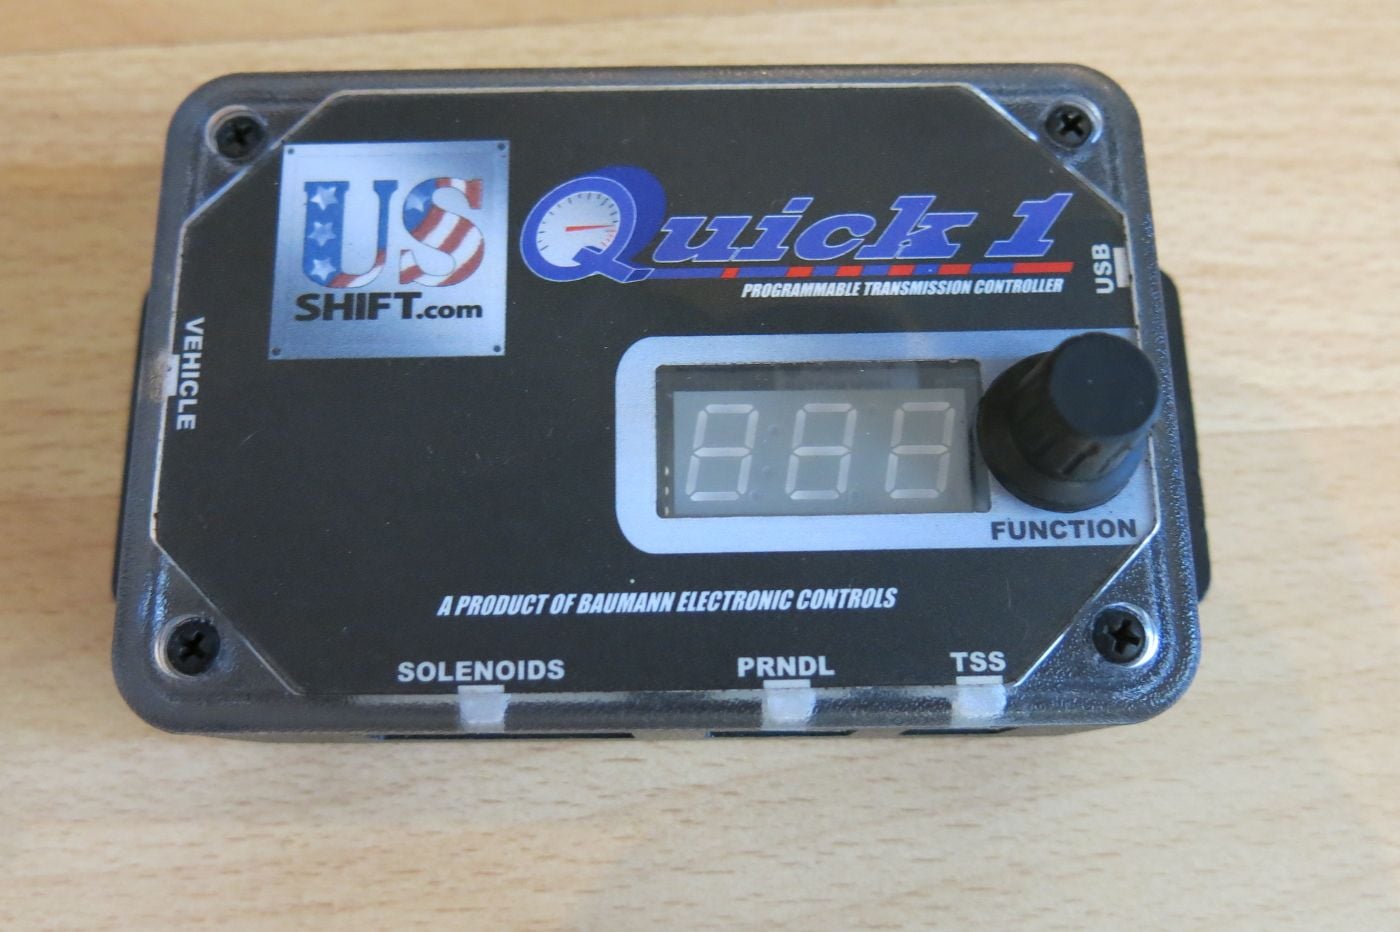  - US Shift Quick 1 Standalone Transmission Controller for 4L60E, 4L65E, 4L70E, 4L80E - Bangor, ME 04401, United States